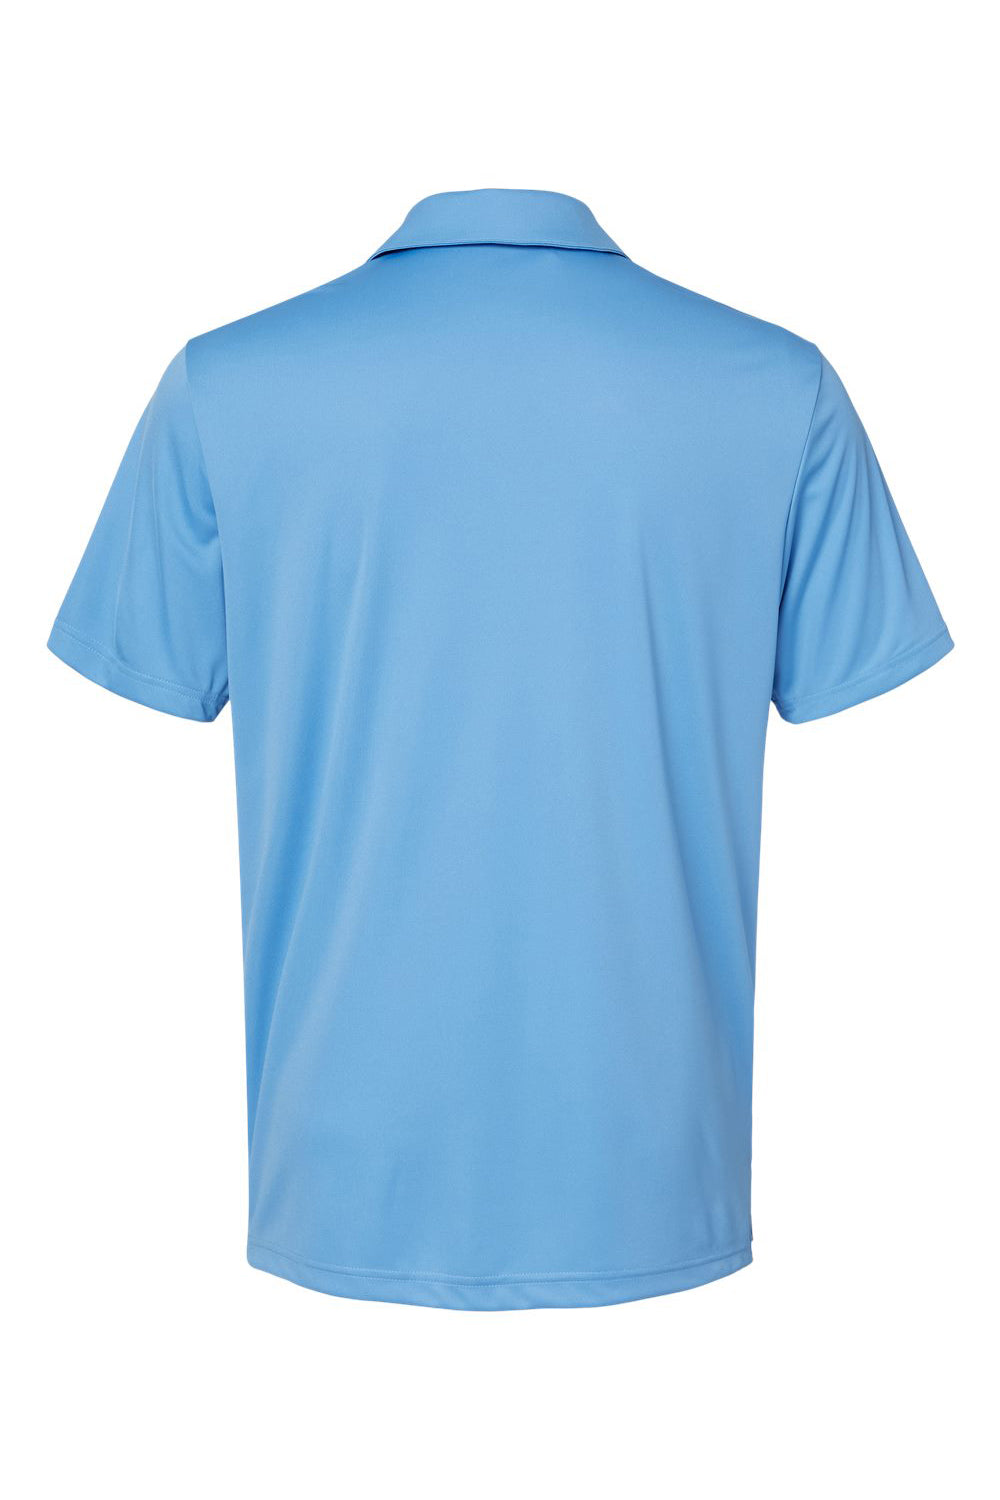 Adidas A324 Mens 3 Stripes Short Sleeve Polo Shirt Lucky Blue/White Flat Back